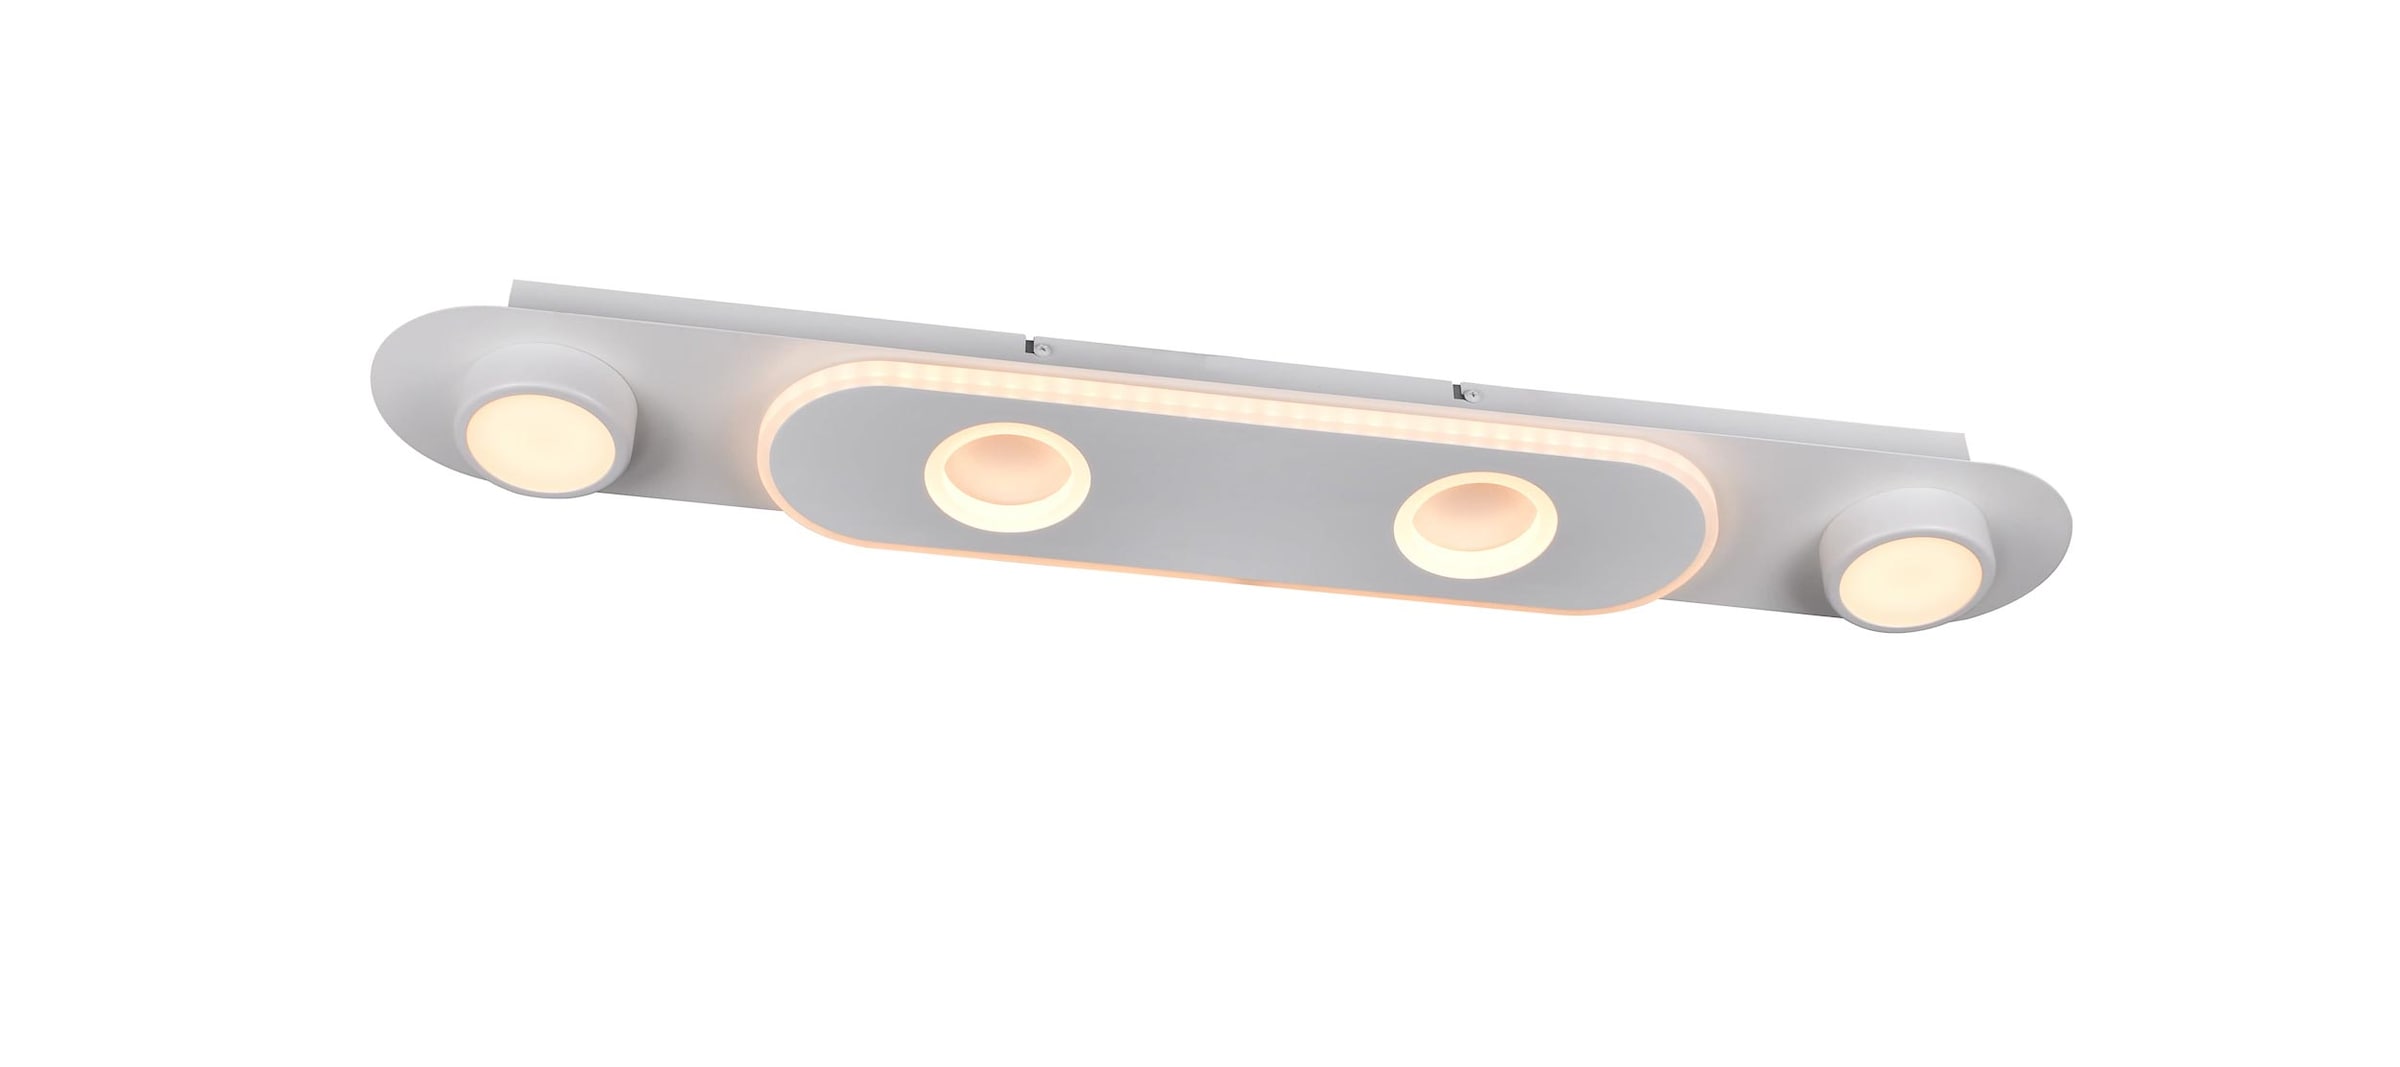 Brilliant LED Deckenstrahler »Irelia«, 1 flammig-flammig, 80 cm Breite, 3500 lm, warmweiß, schwenkbar, Metall/Kunststoff, weiß